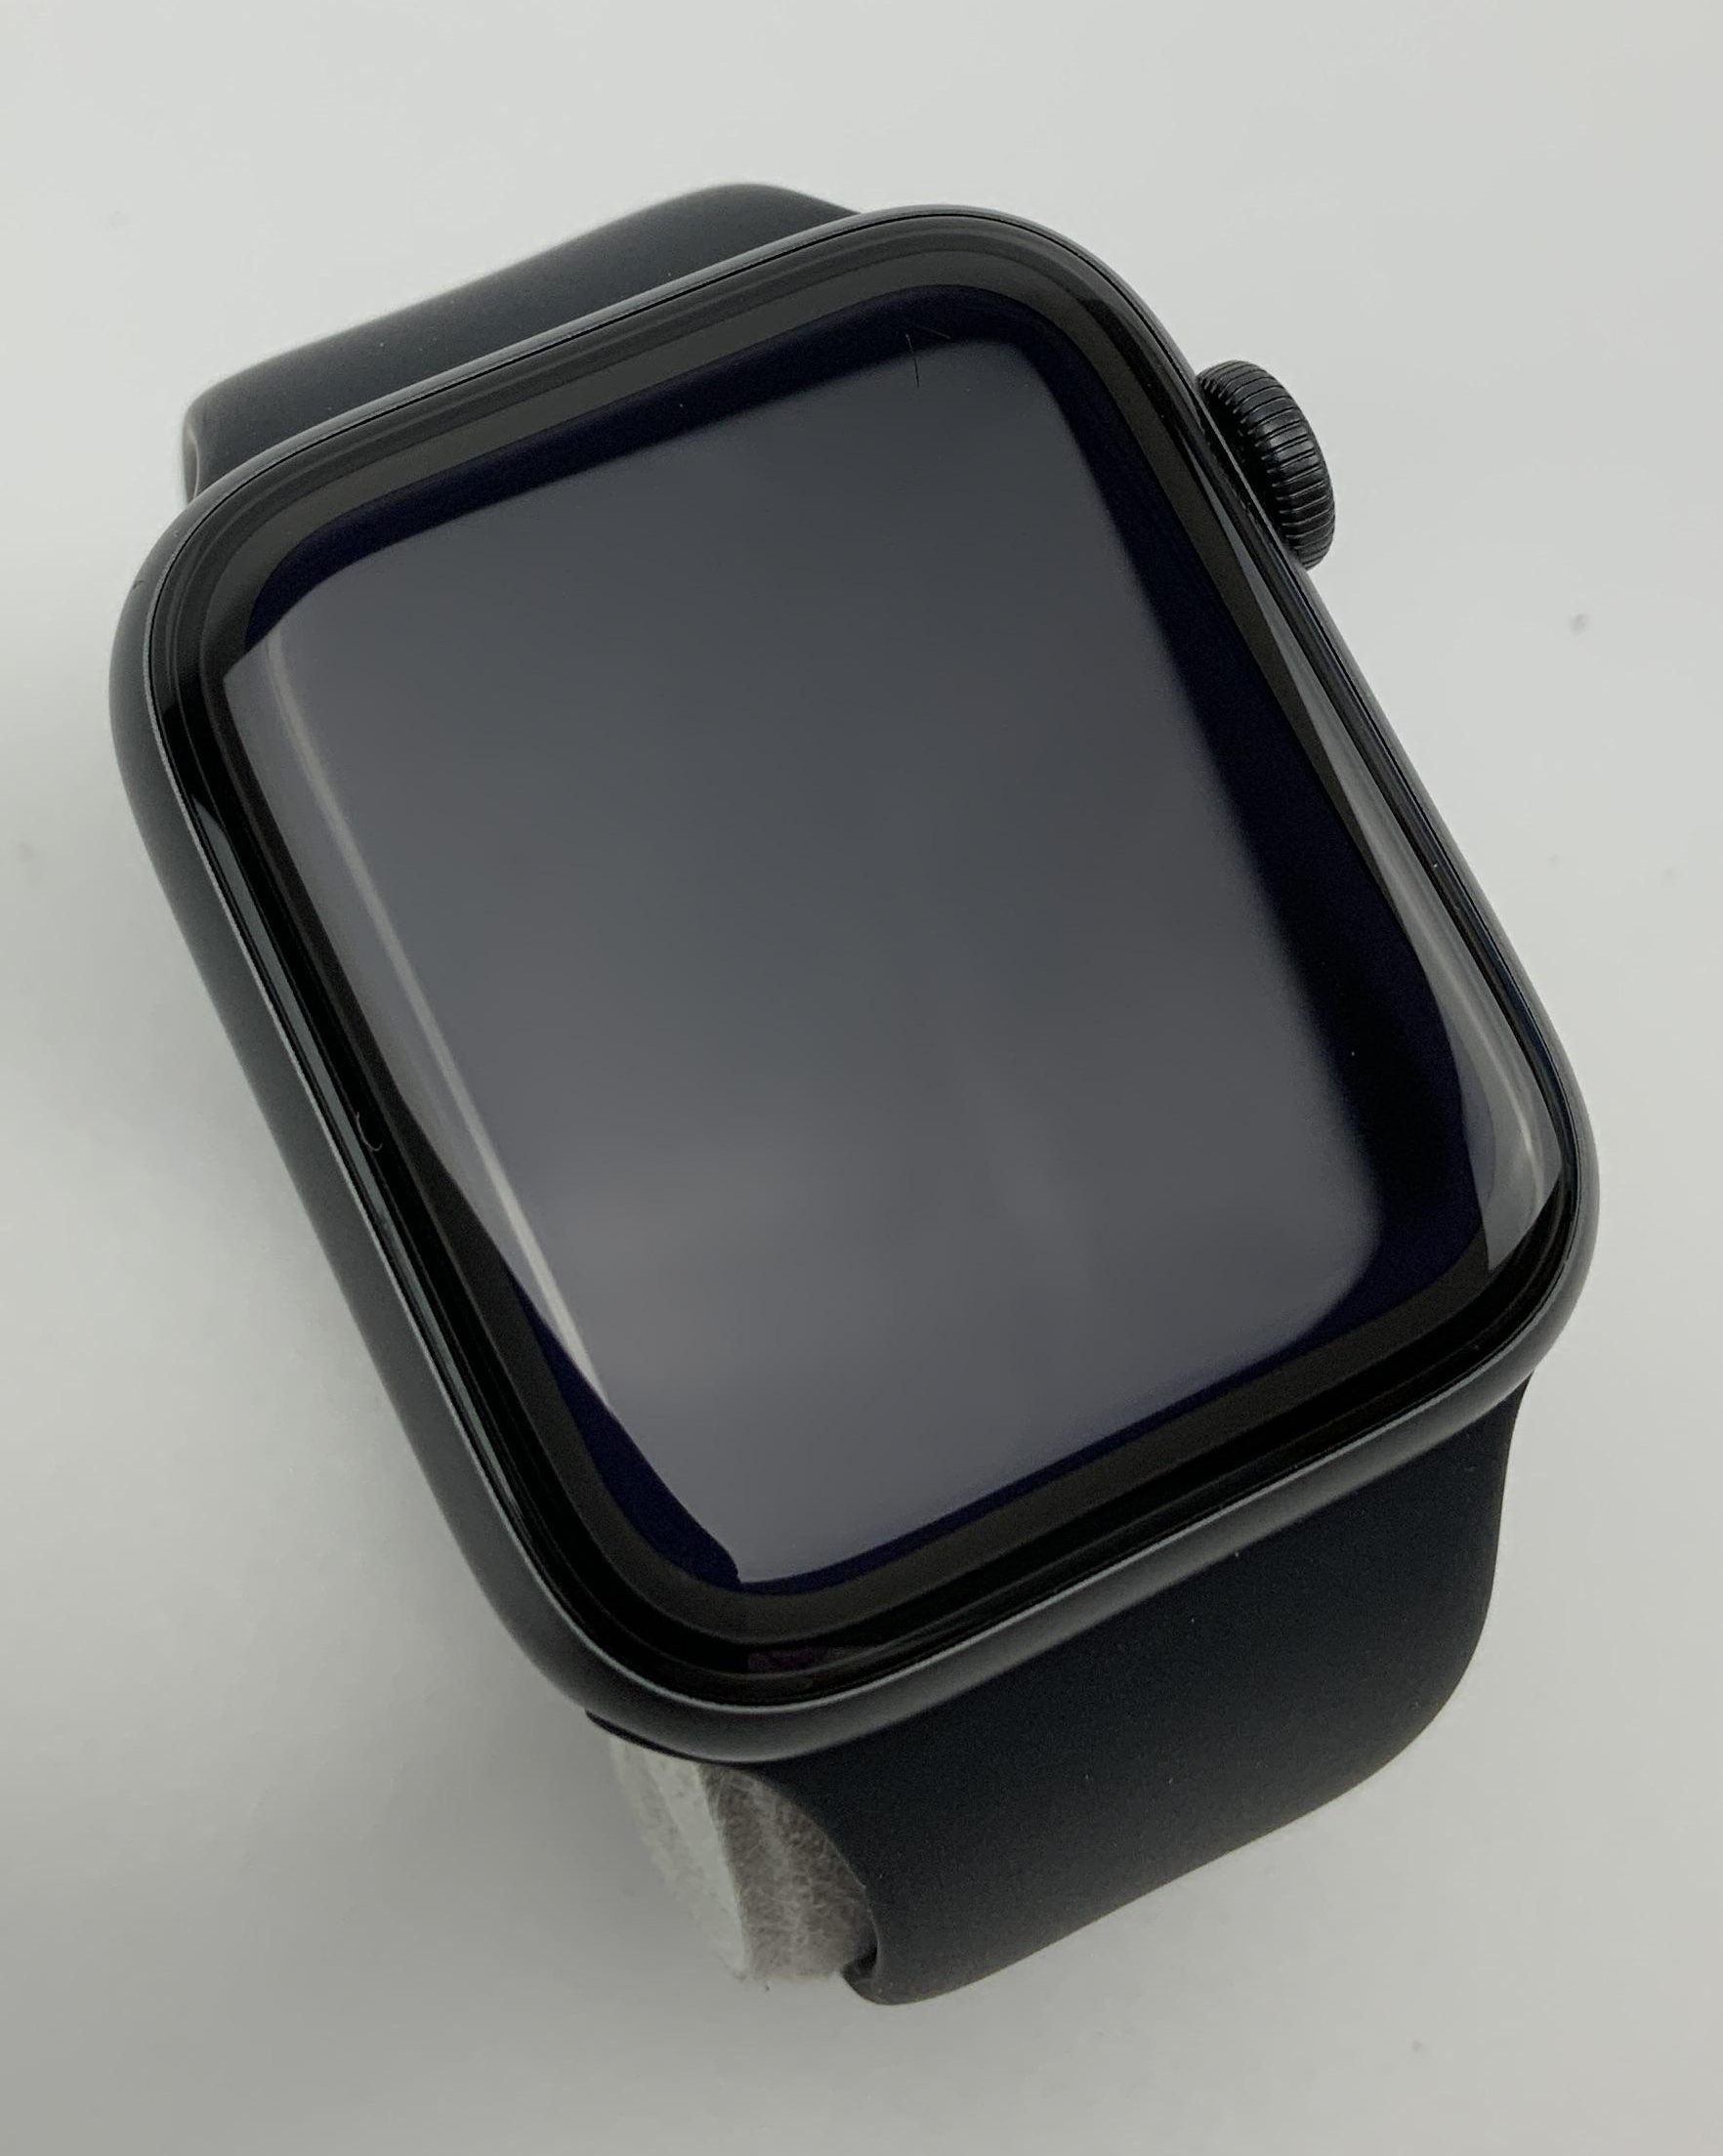 Watch Series 5 Aluminum (44mm), Space Gray, Afbeelding 2